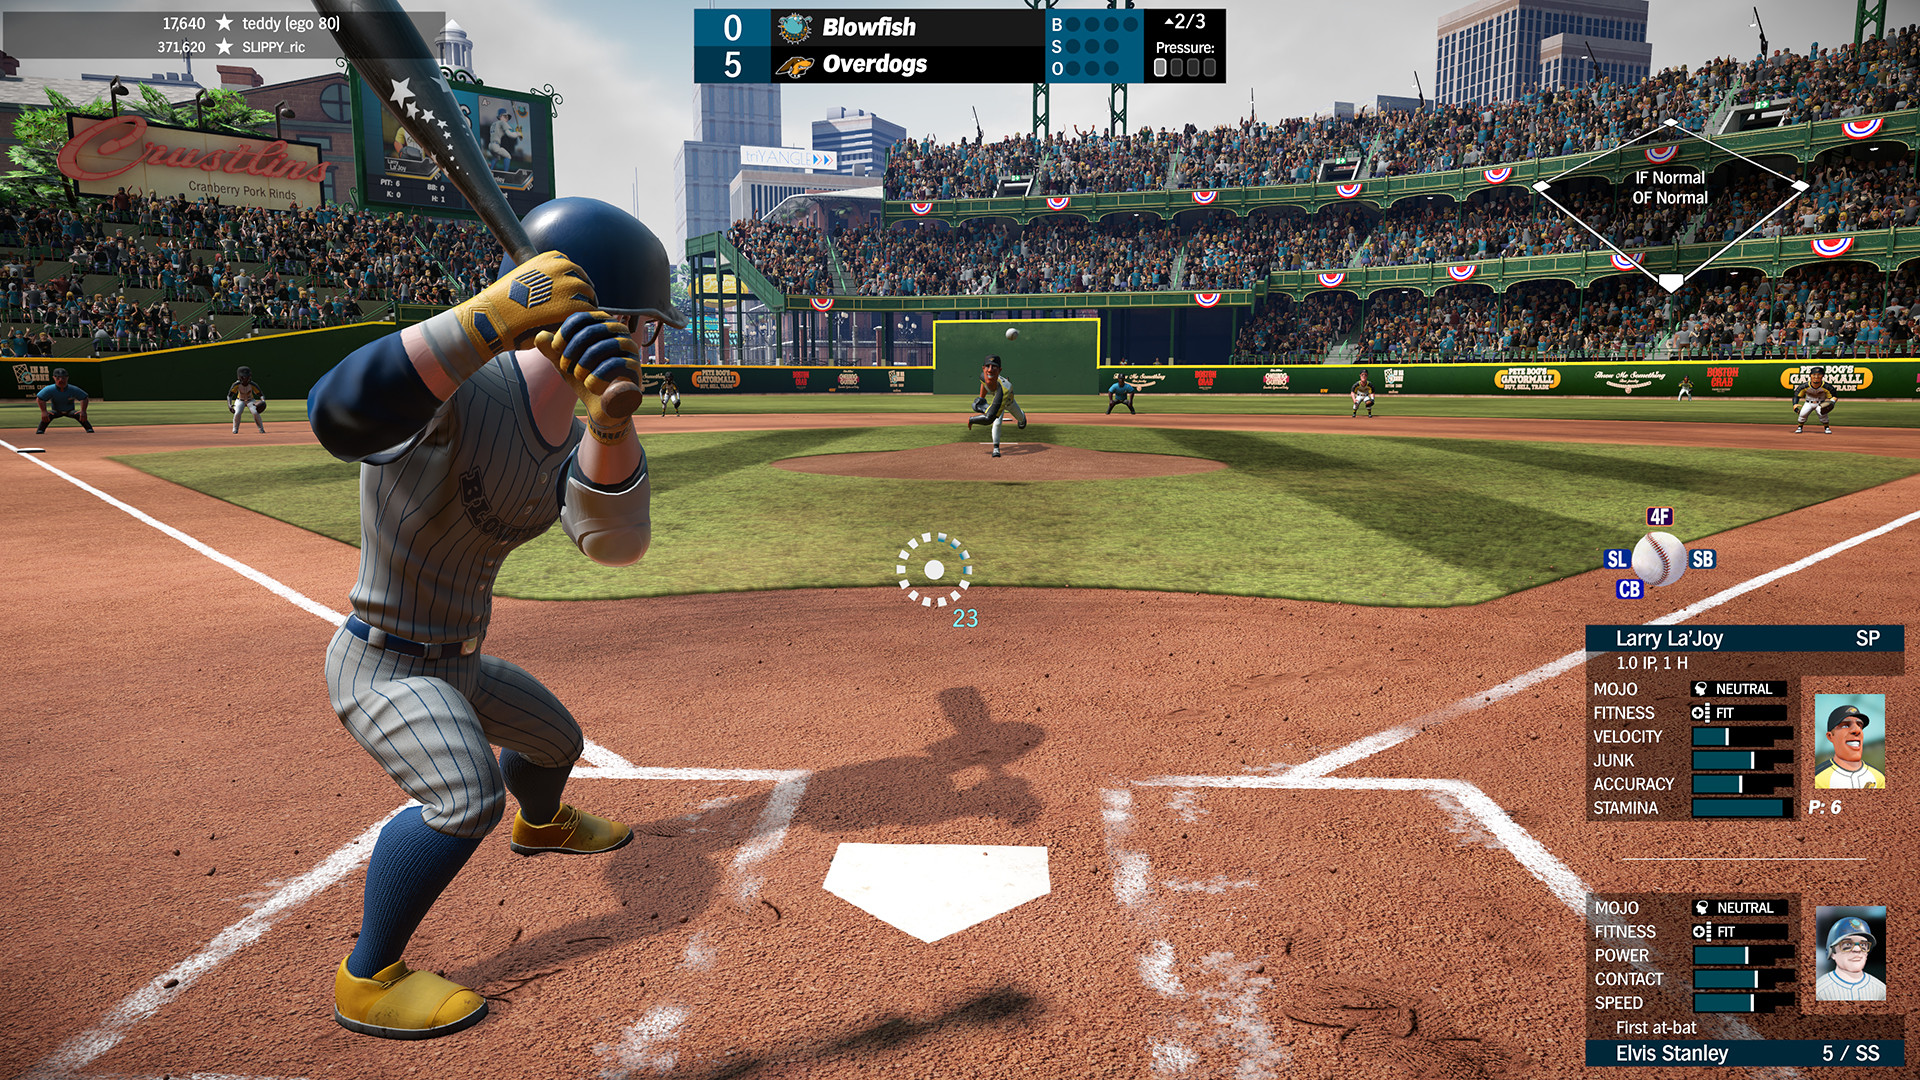 Super Mega Baseball 3 Free Download